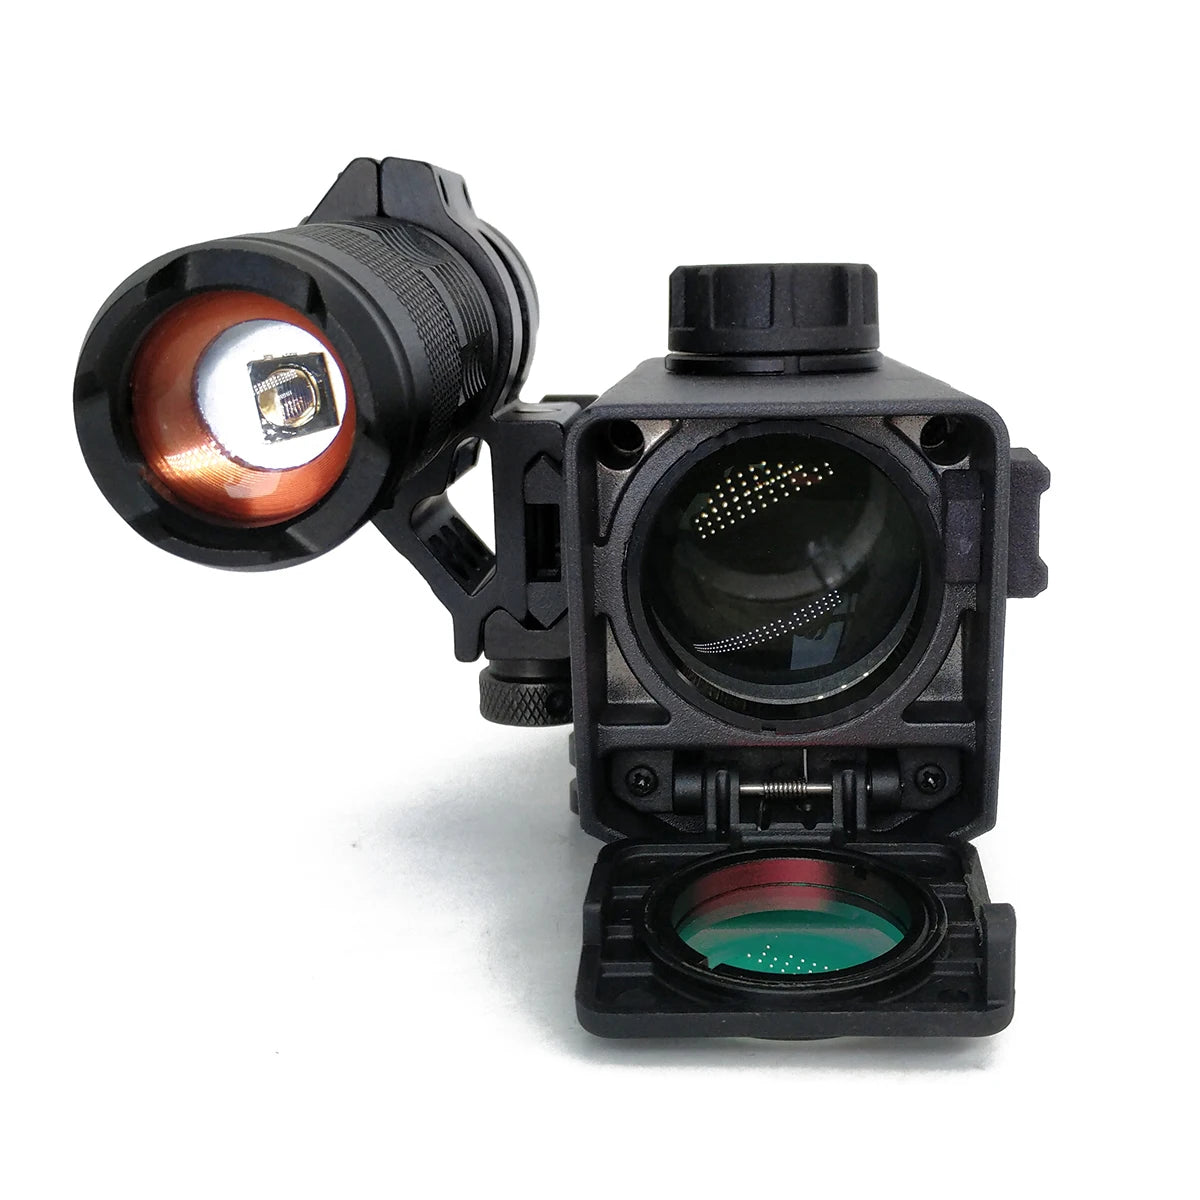 TONTUBE Infrared Night Vision TRD10Pro Red Dot Laser Optical Sight